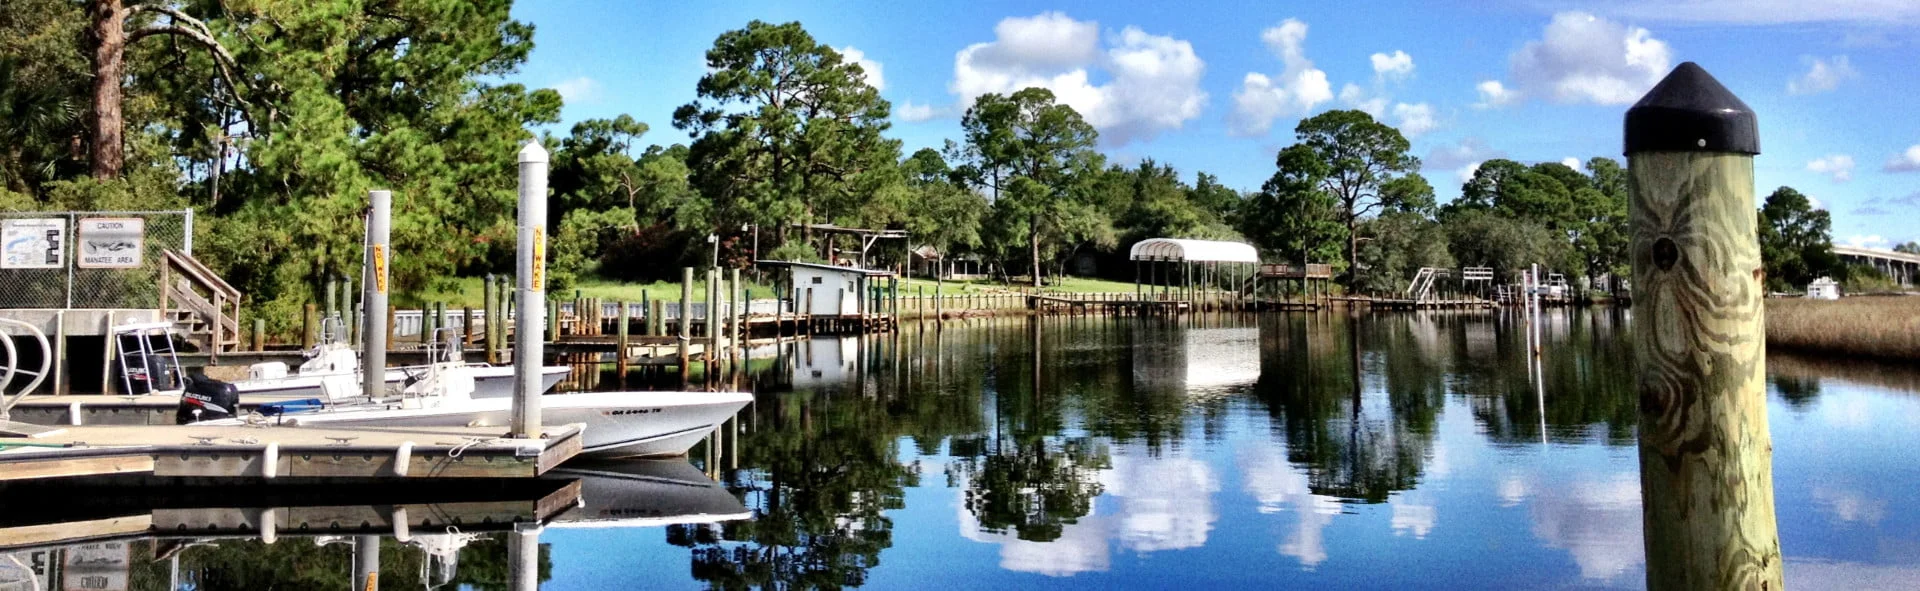 Carrabelle Florida Boat Club